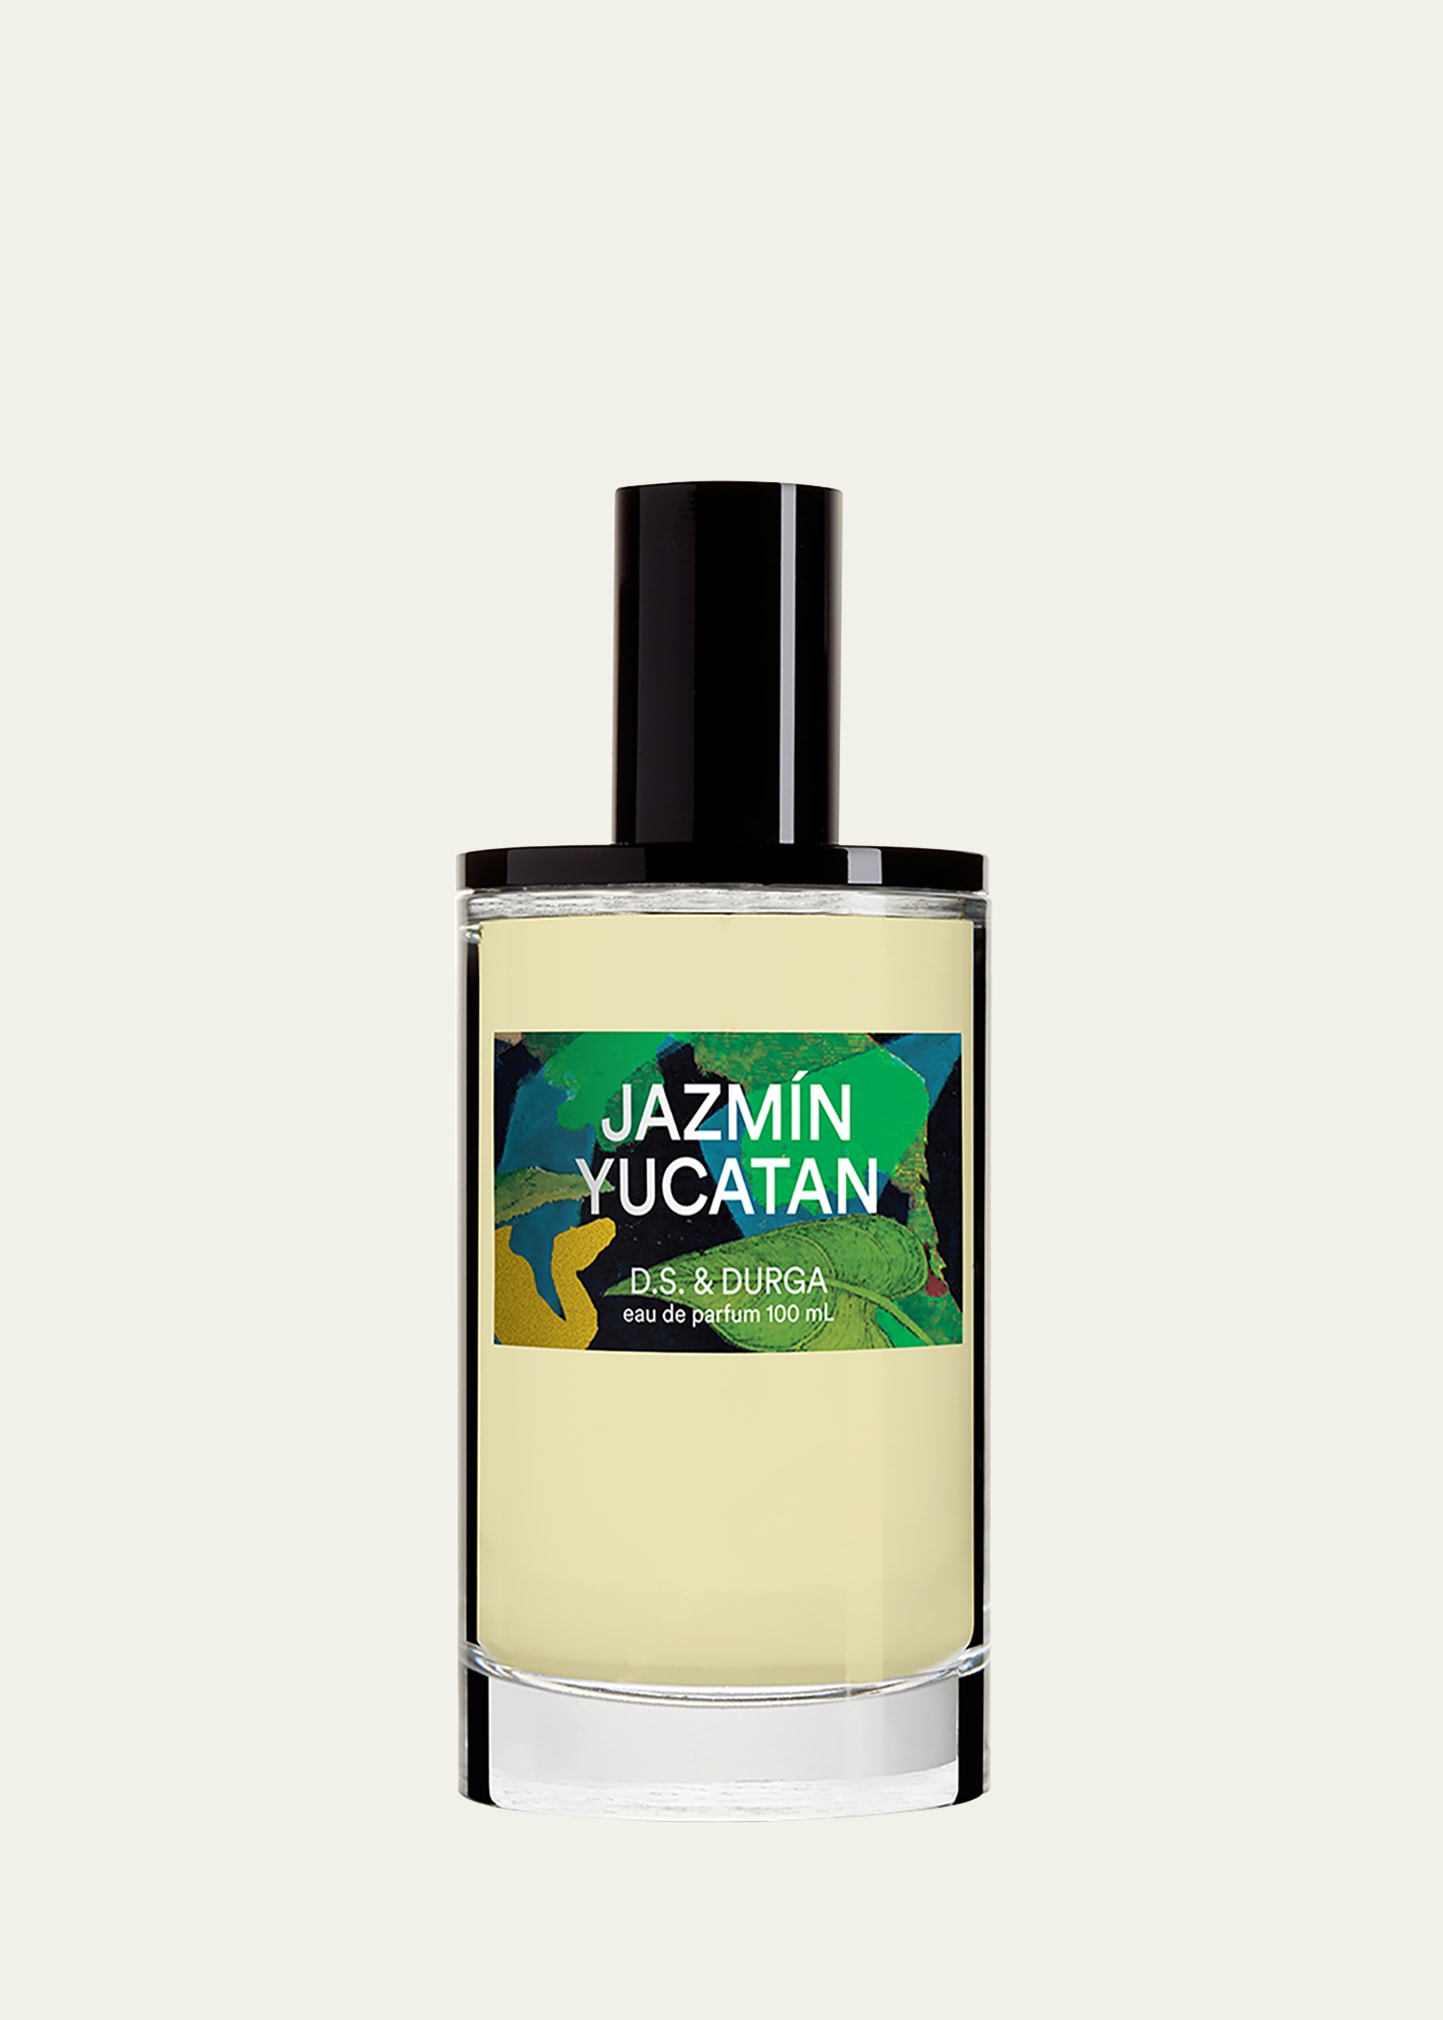 D.S. & DURGA Jazmin Yucatan Eau de Parfum, 3.4 oz.